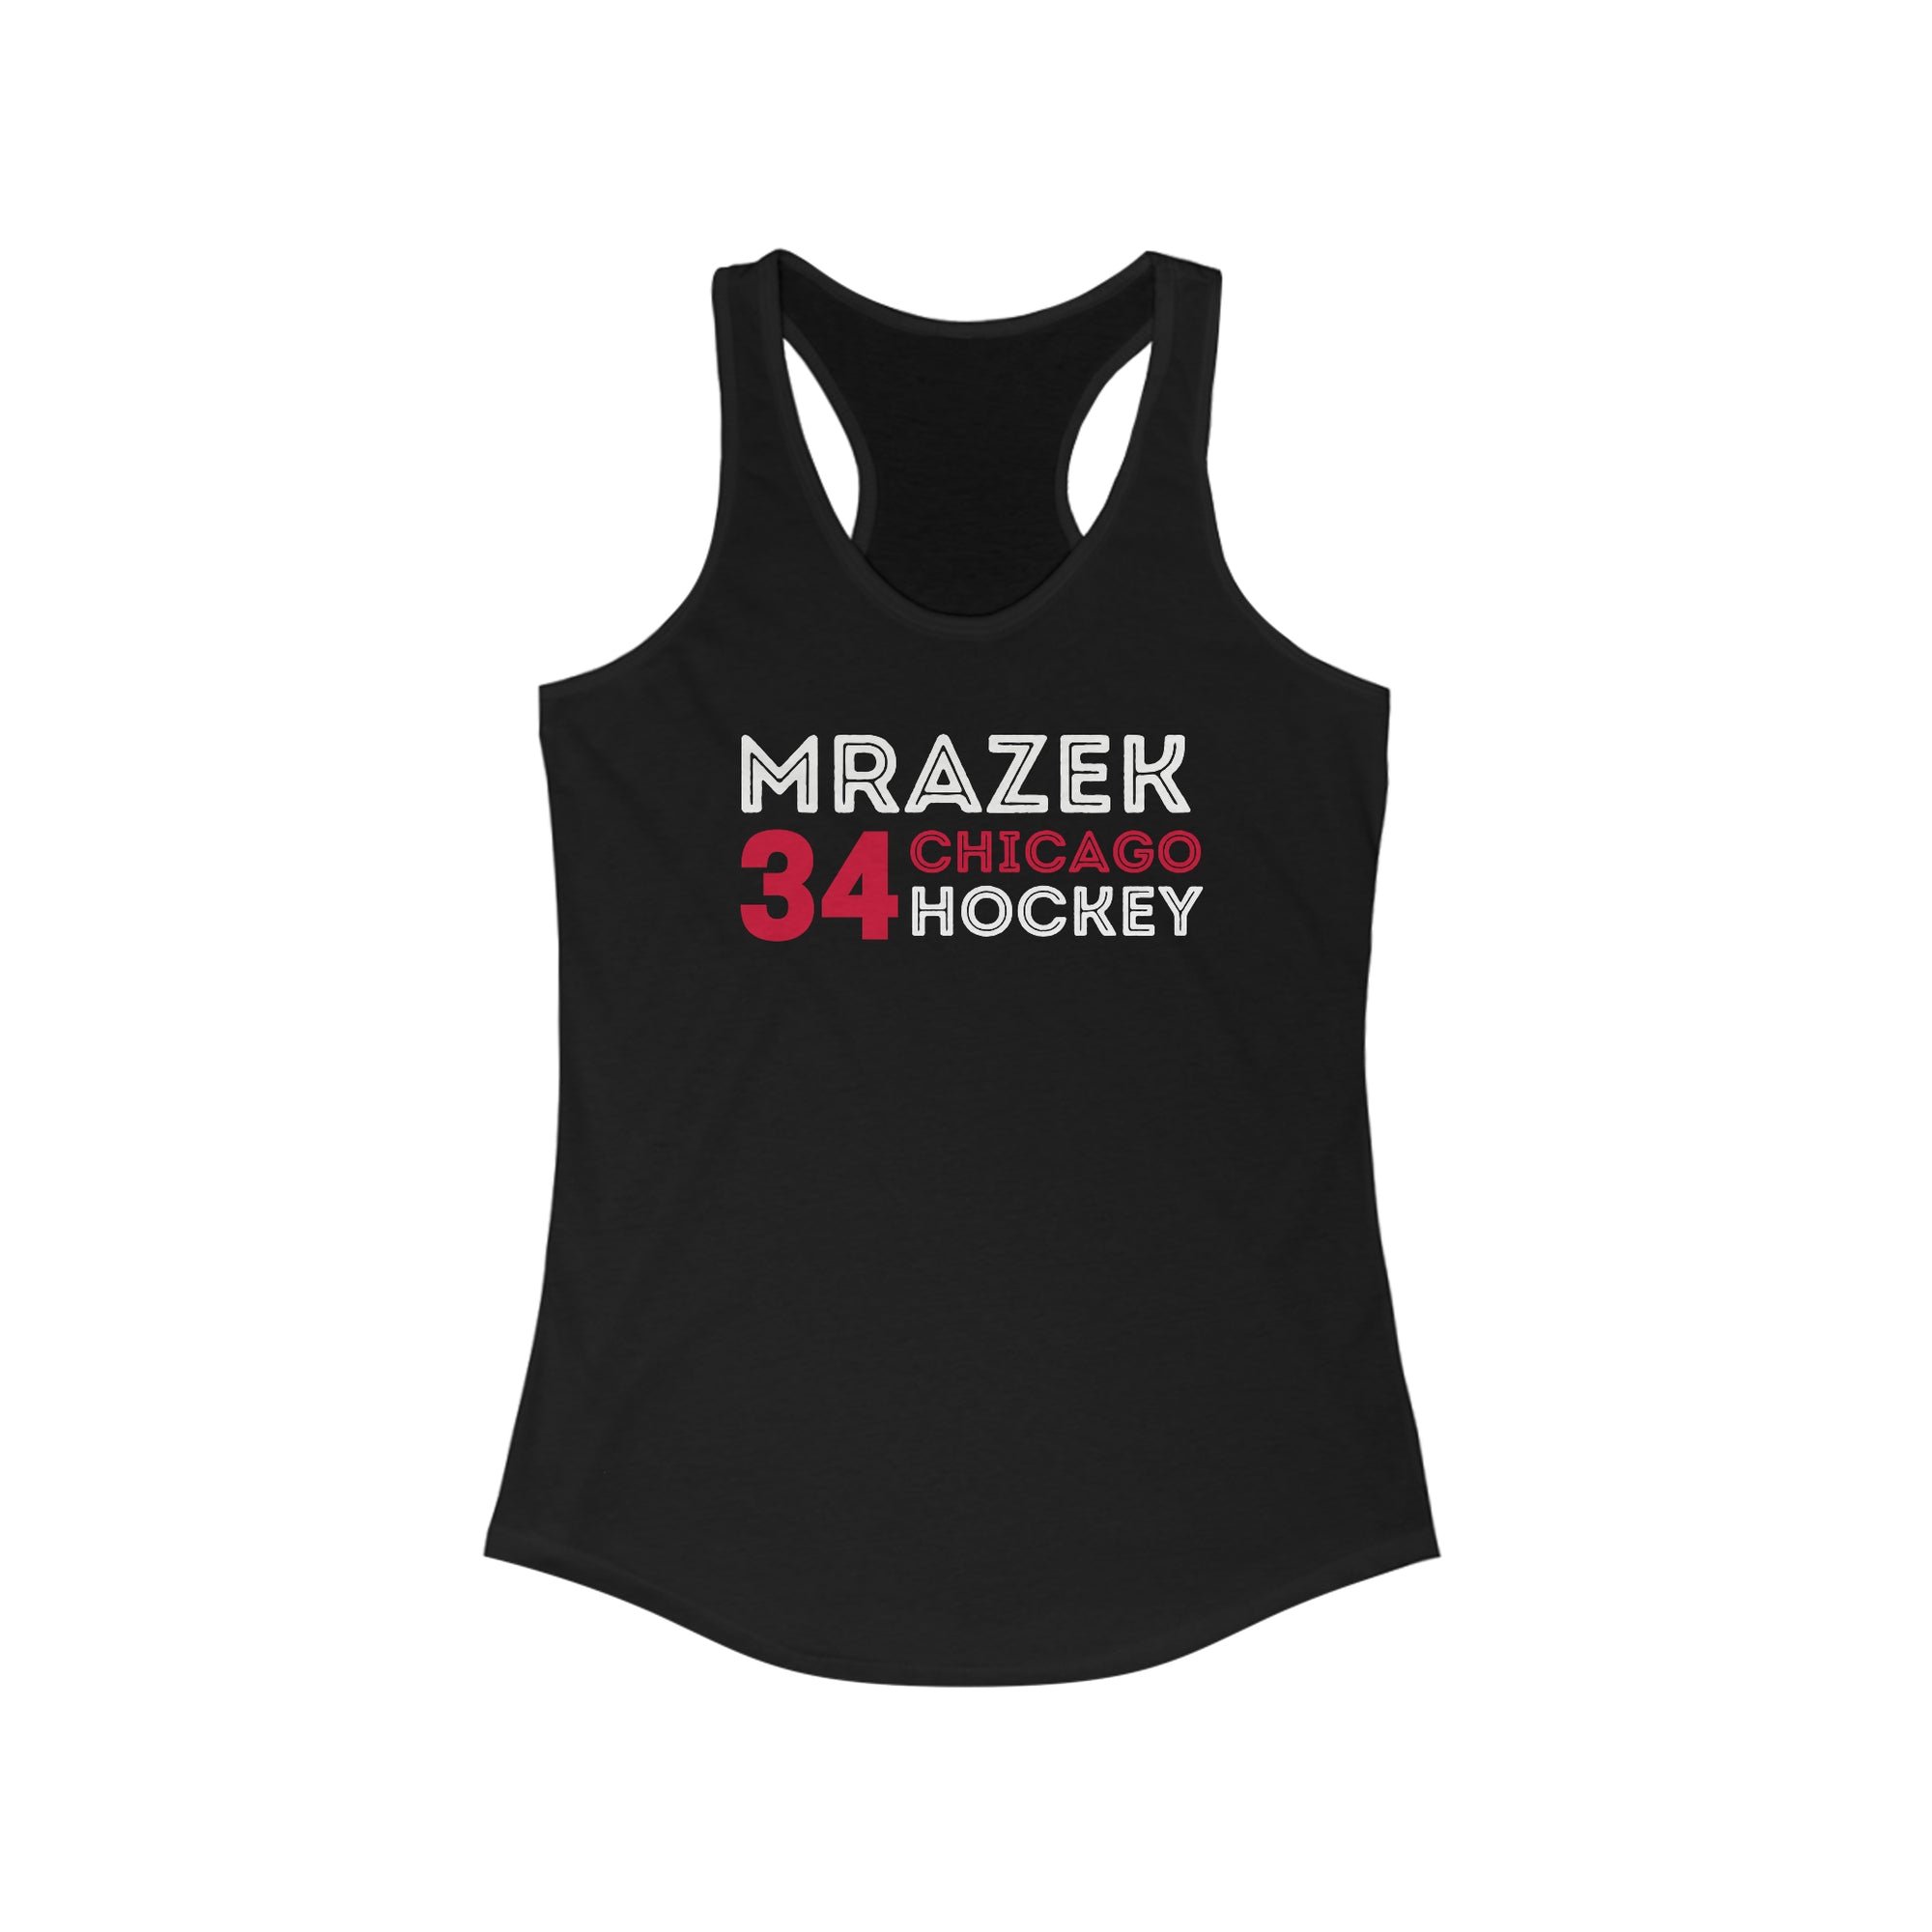 Mrazek 34 Chicago Hockey Grafitti Wall Design Women's Ideal Racerback Tank Top